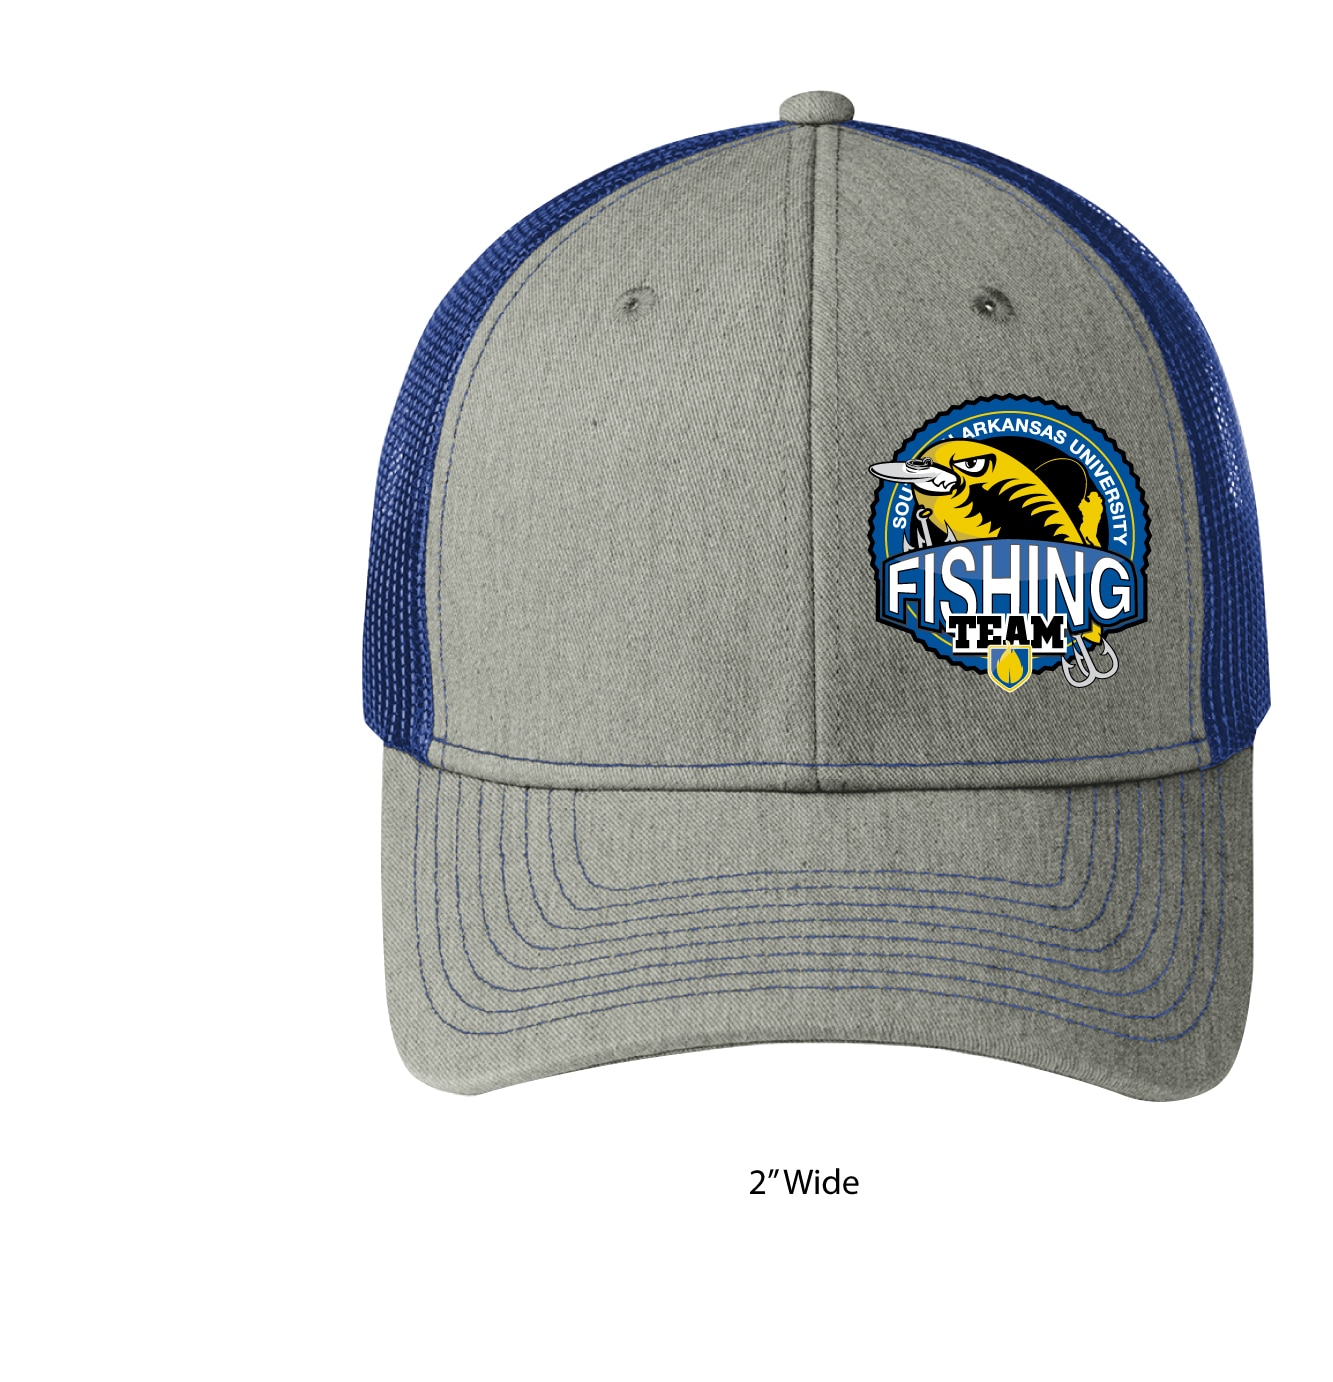 Fishing Team Hat and Shirt Order Form | Students | Southern Arkansas ...